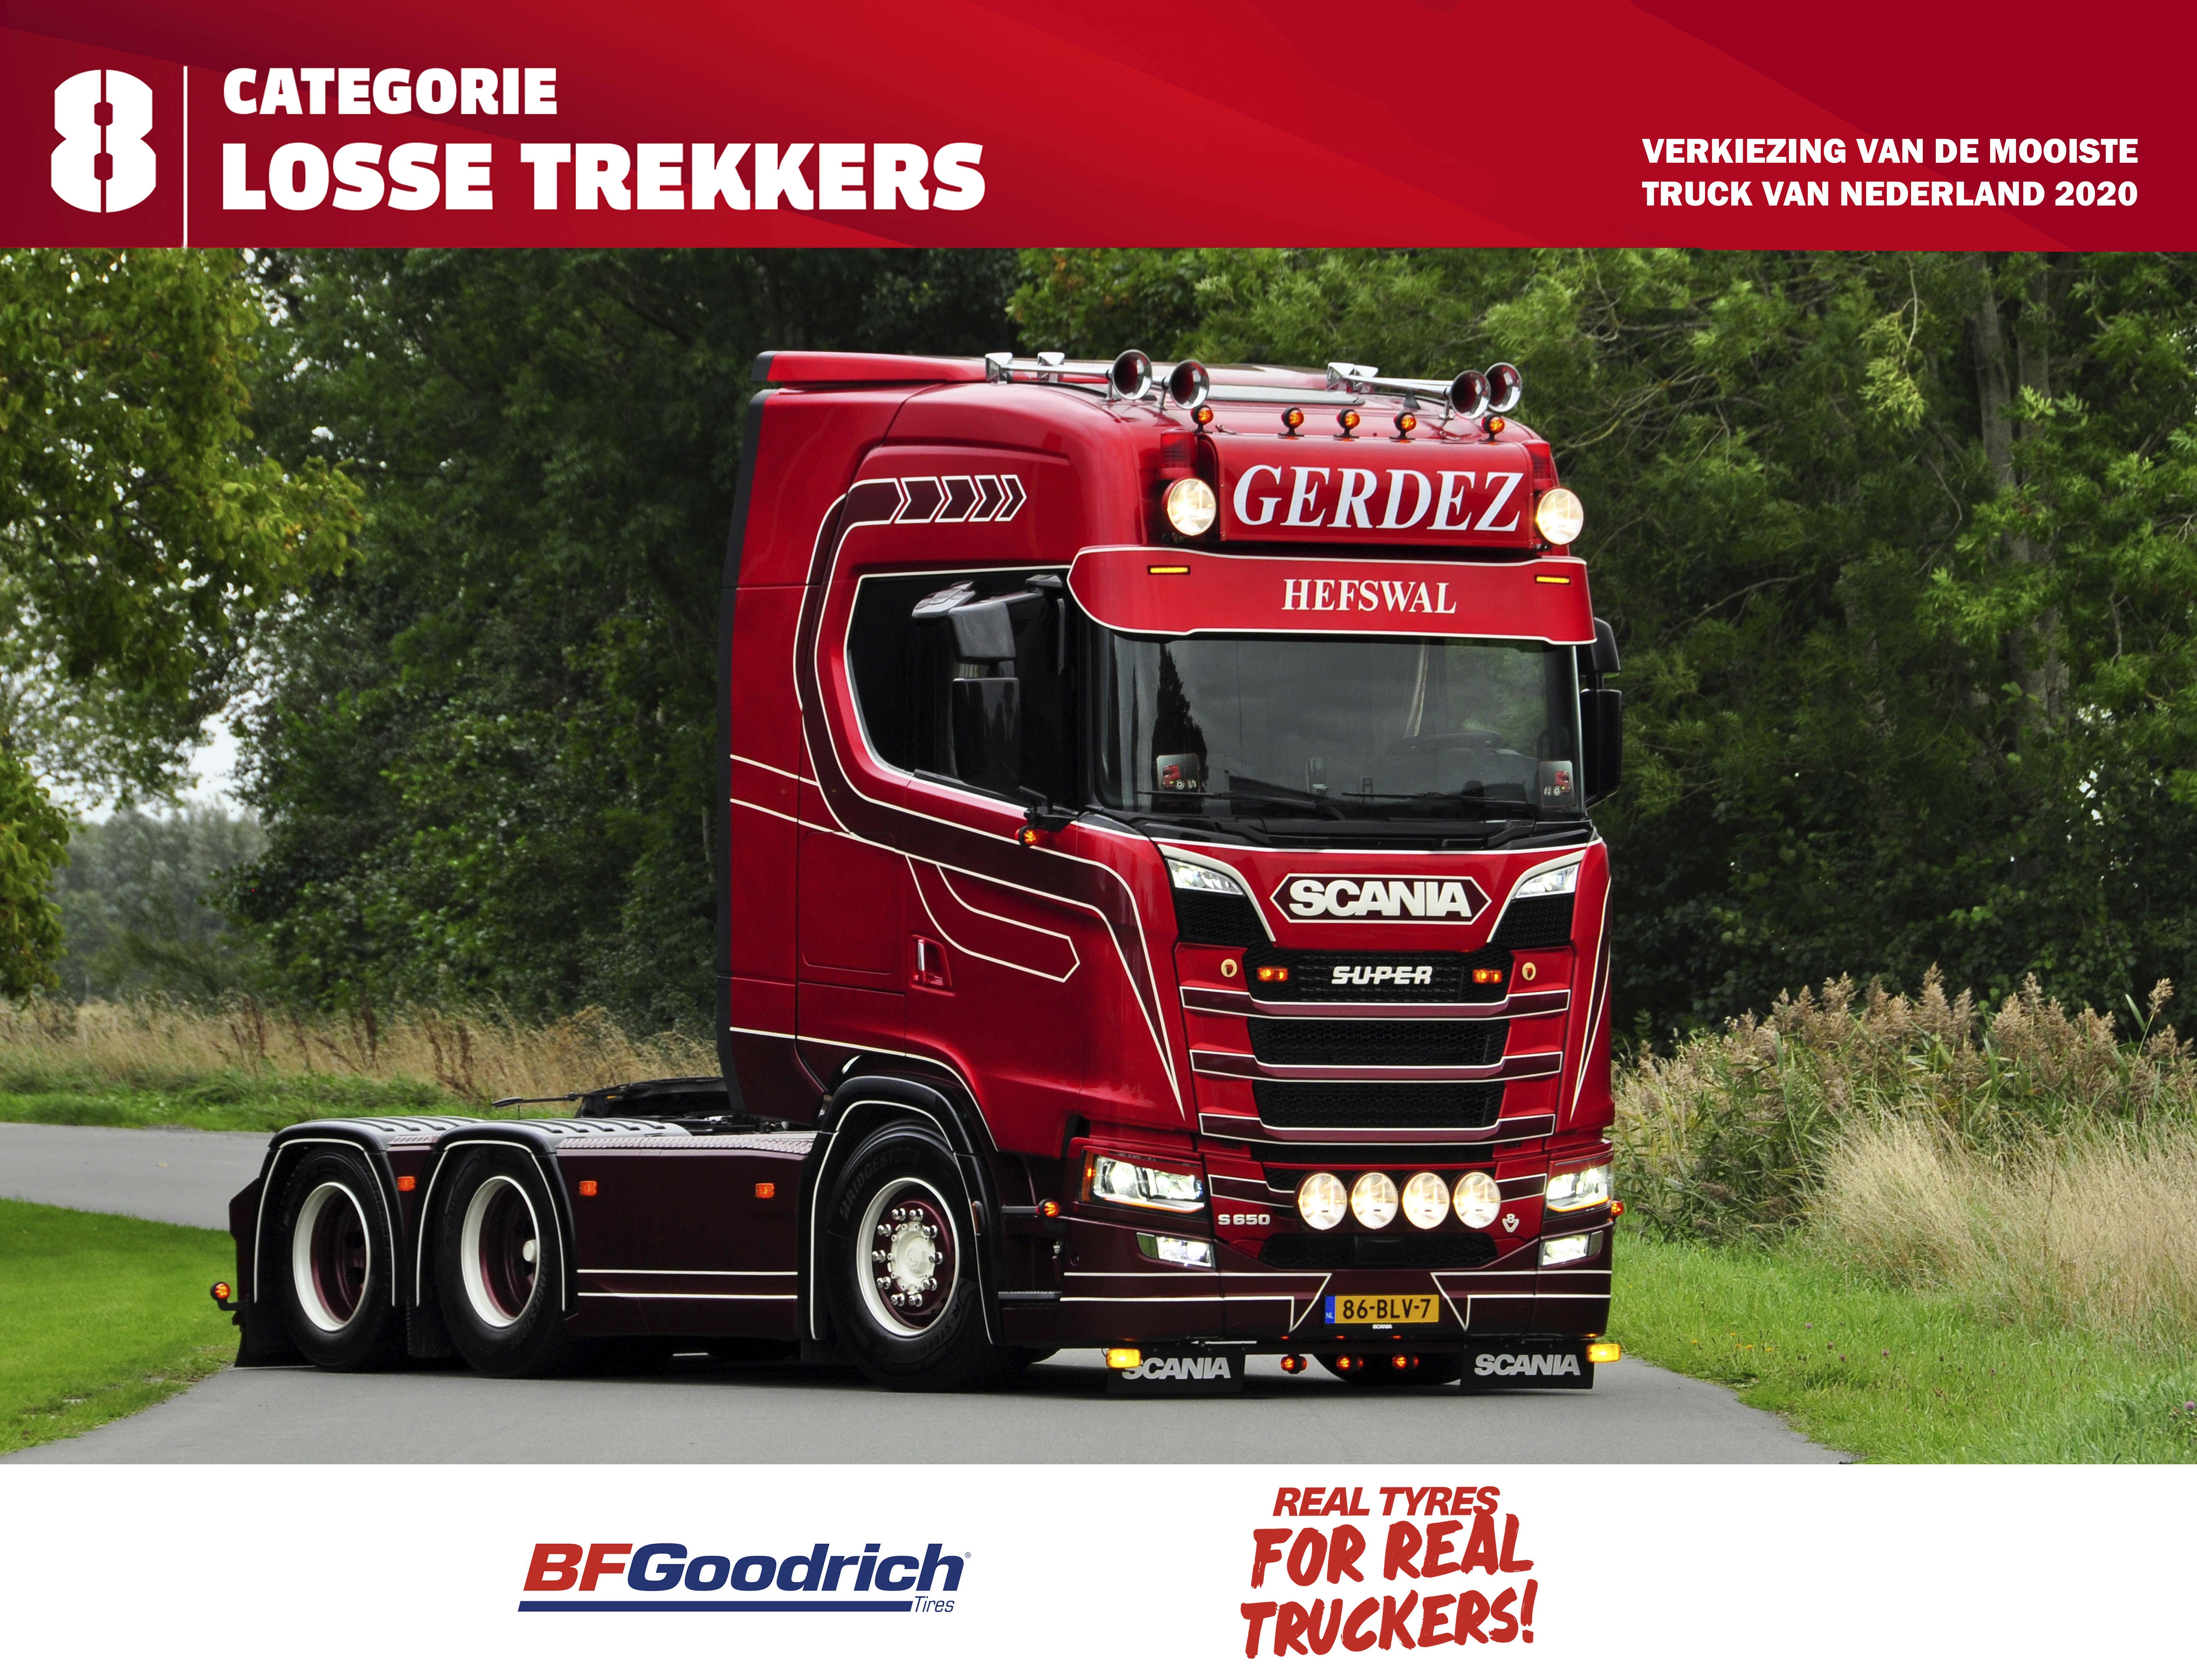 beloning voorzichtig Hoge blootstelling Mooiste Truck van Nederland 2020: cat. 8 – losse trekkers - Truckstar